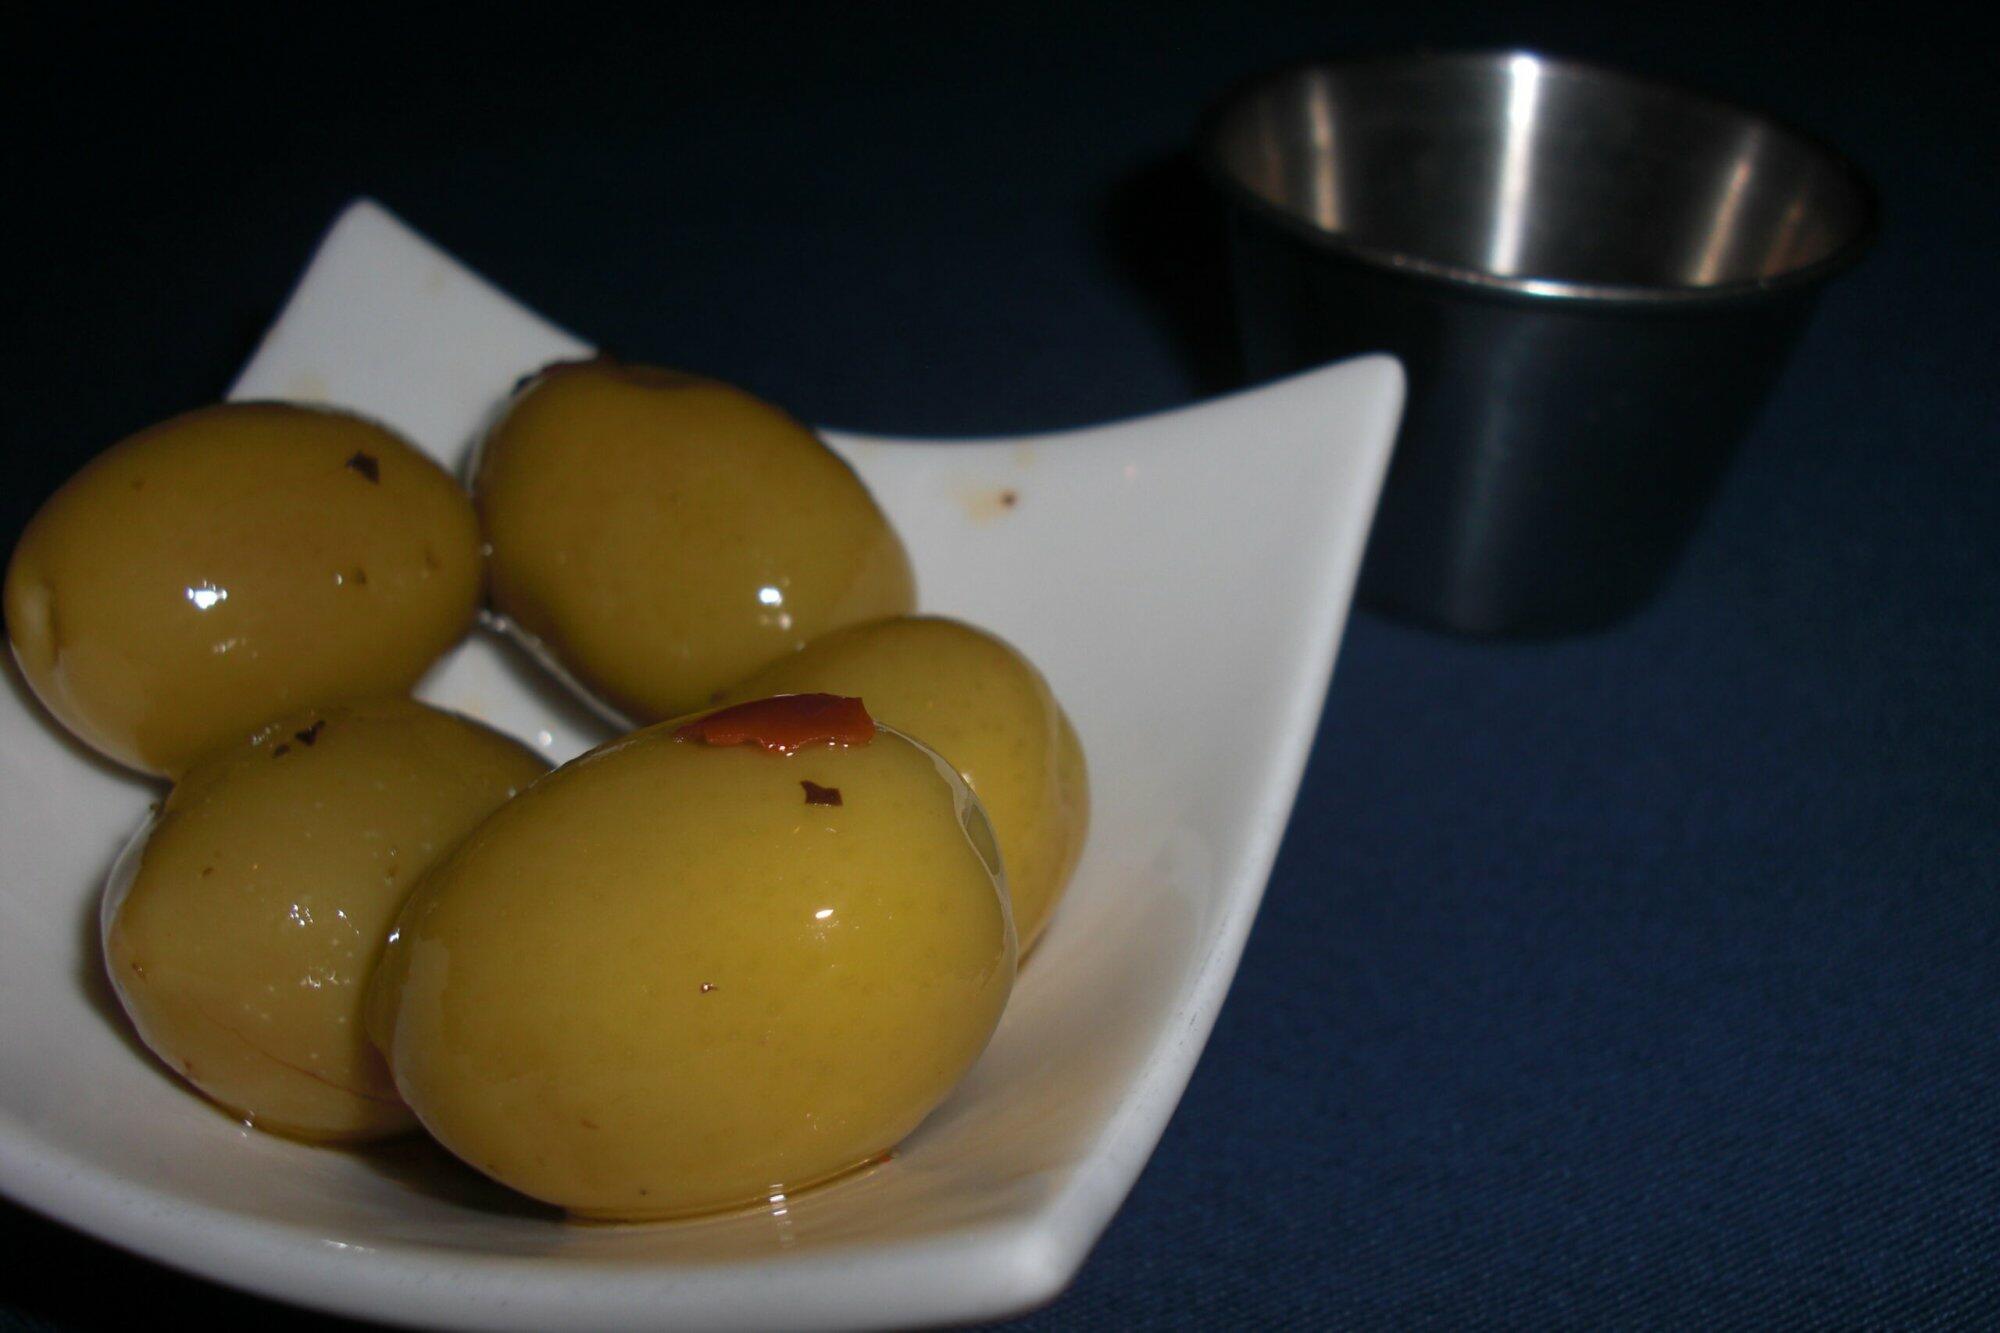 olives at Anise tavern